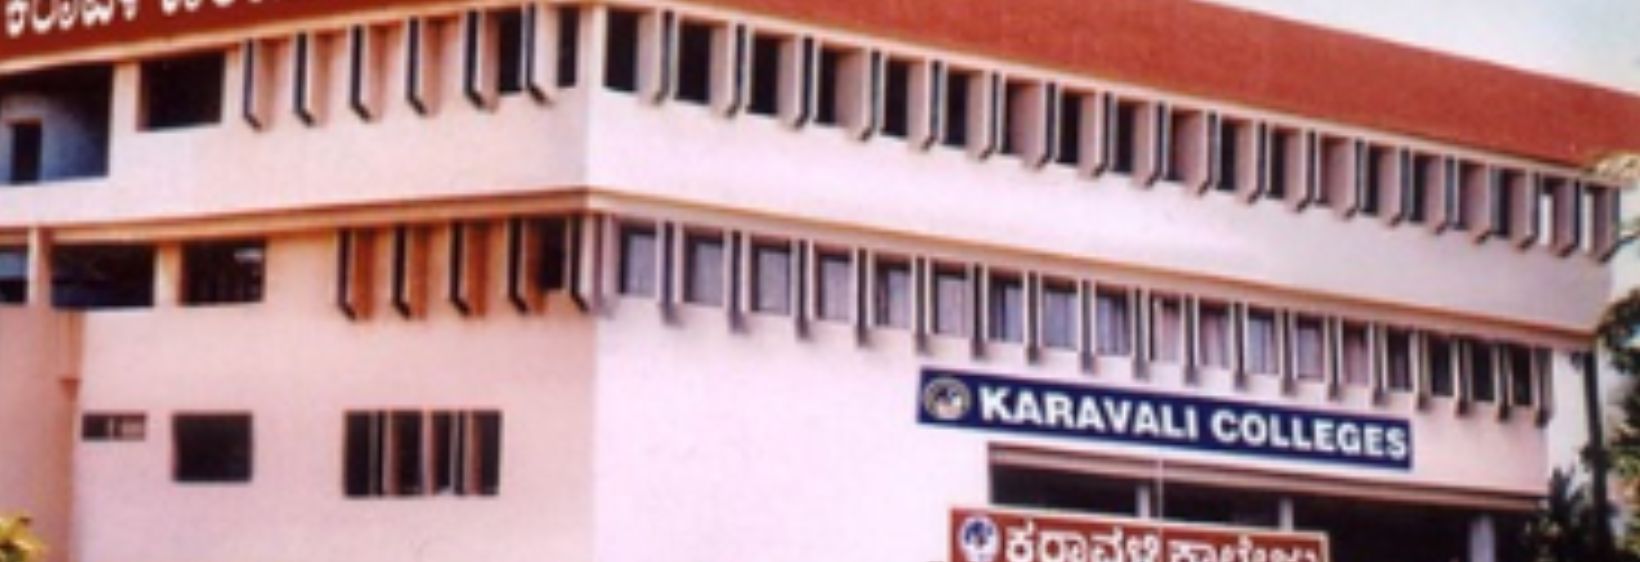 Karavali College of Nursing Science - Mangalore